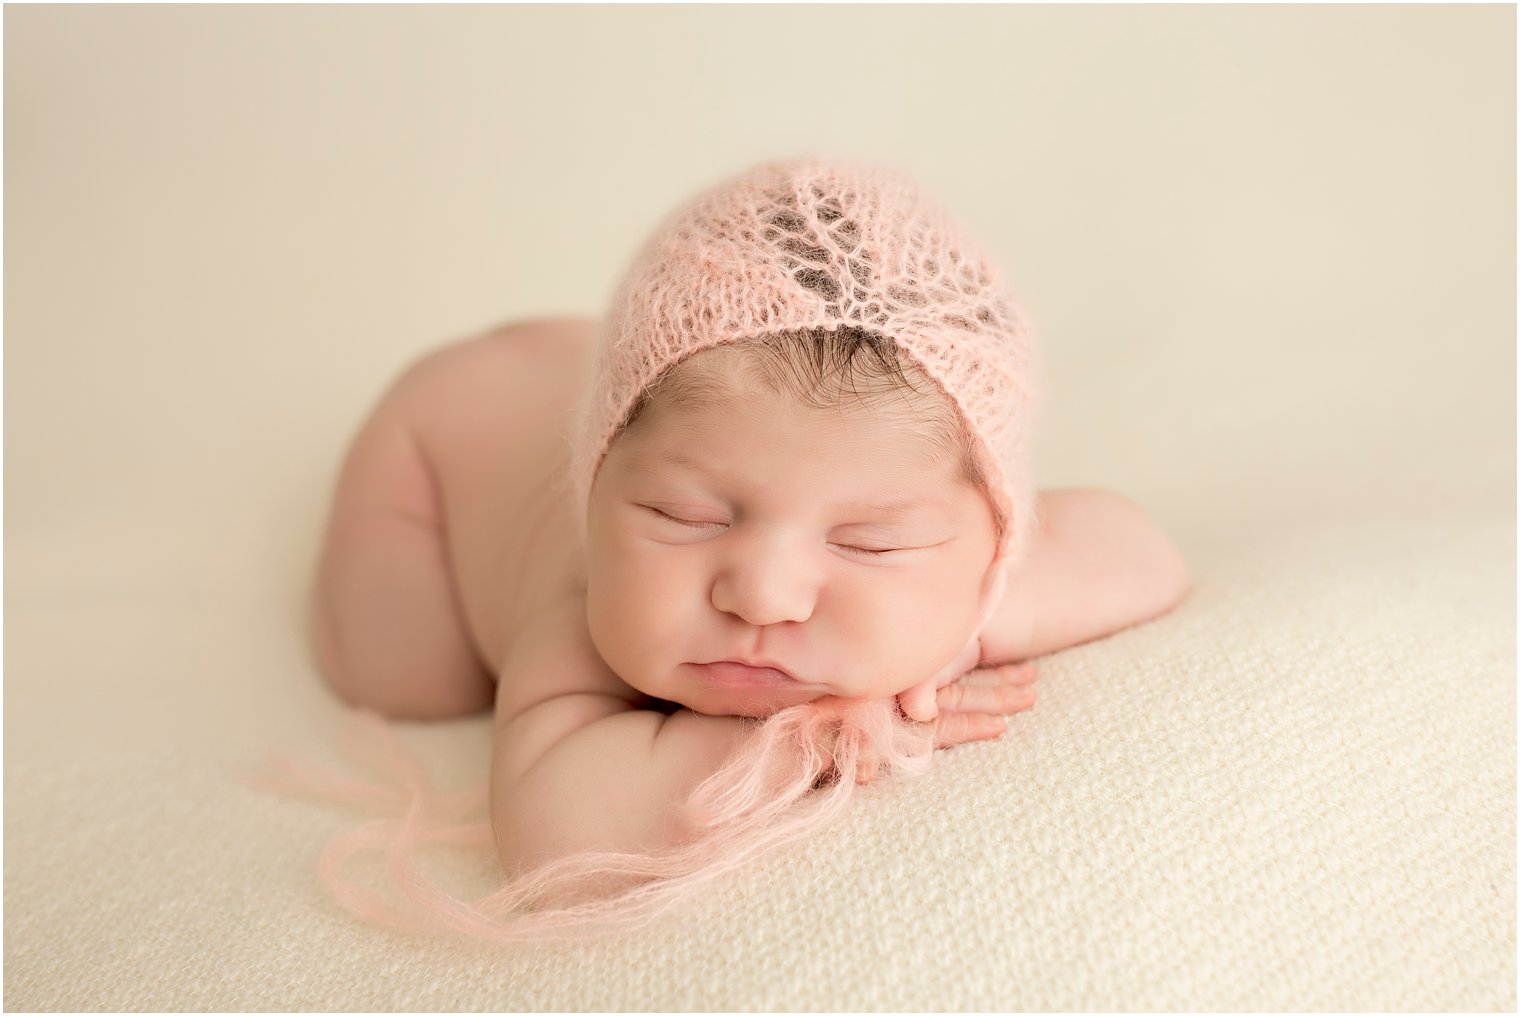 Newborn Photographer NJ captures babies in classic and timeless photos